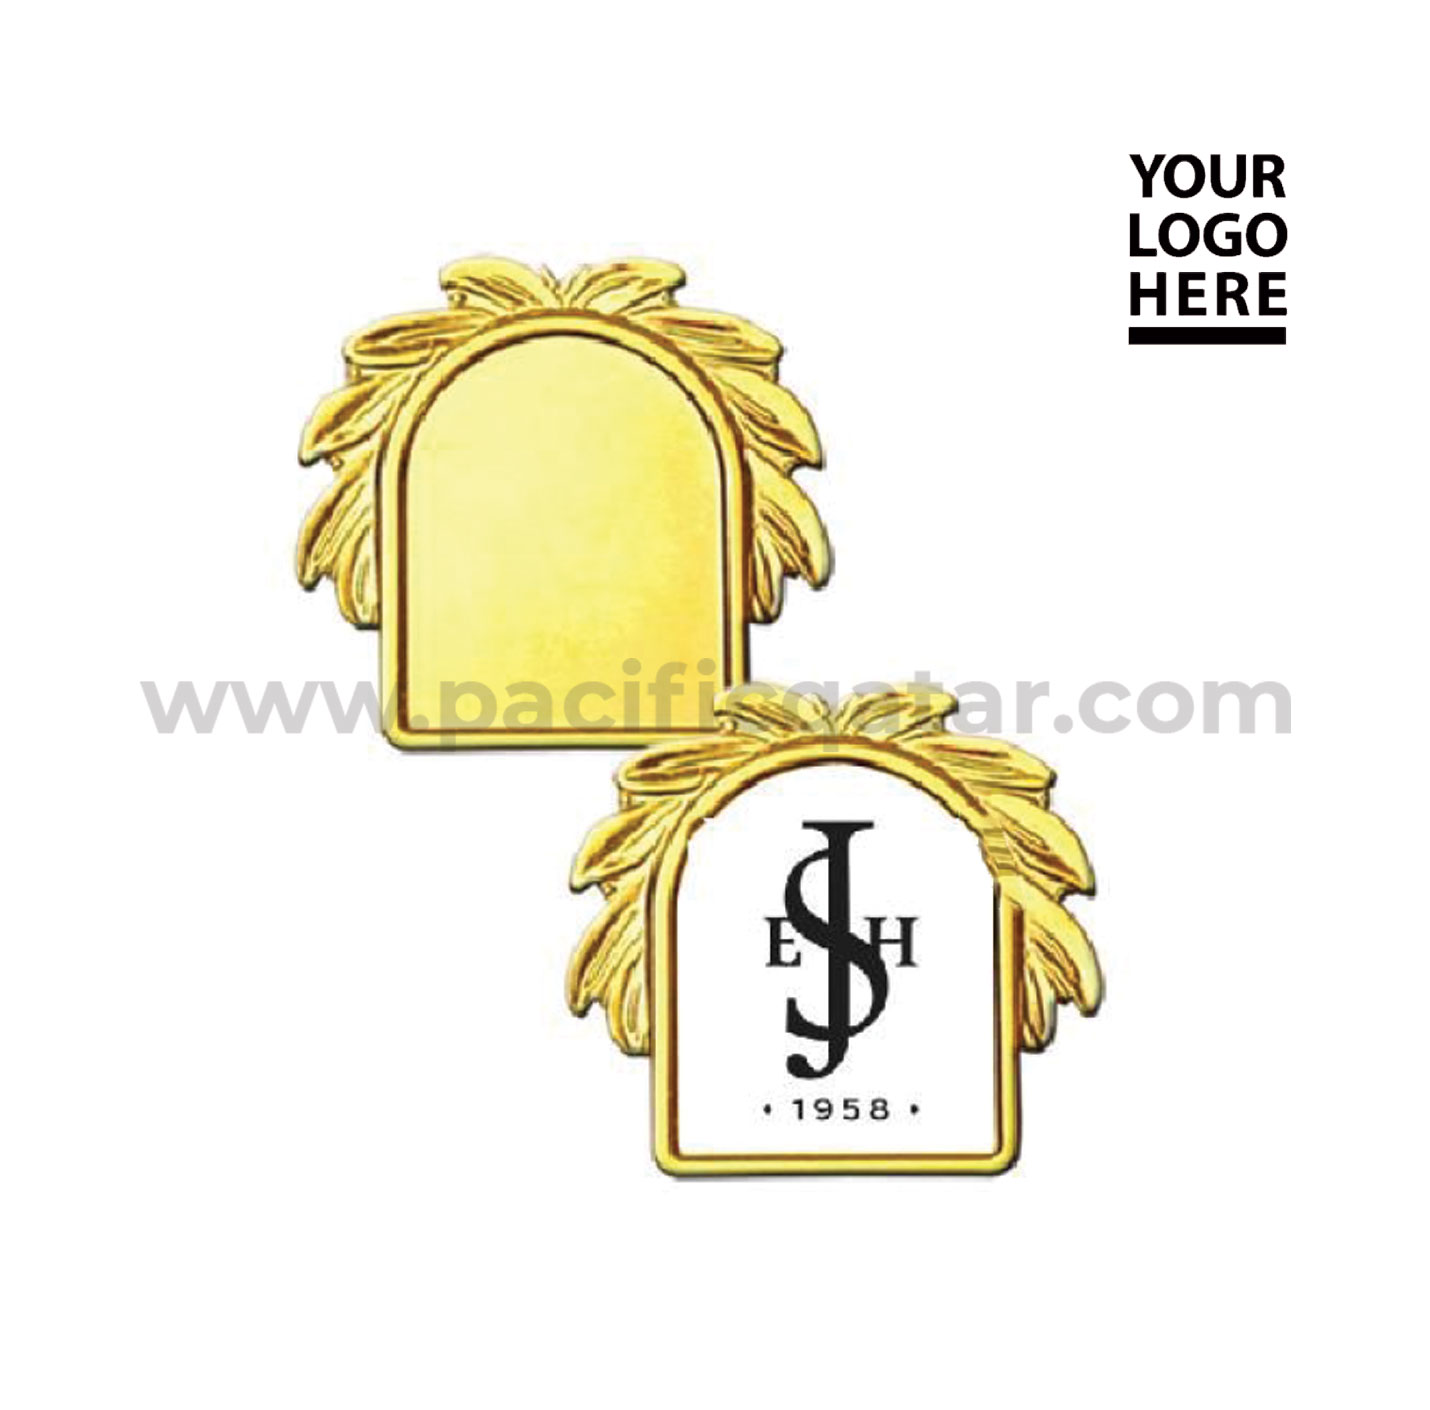 Gold Metal Badge with logo